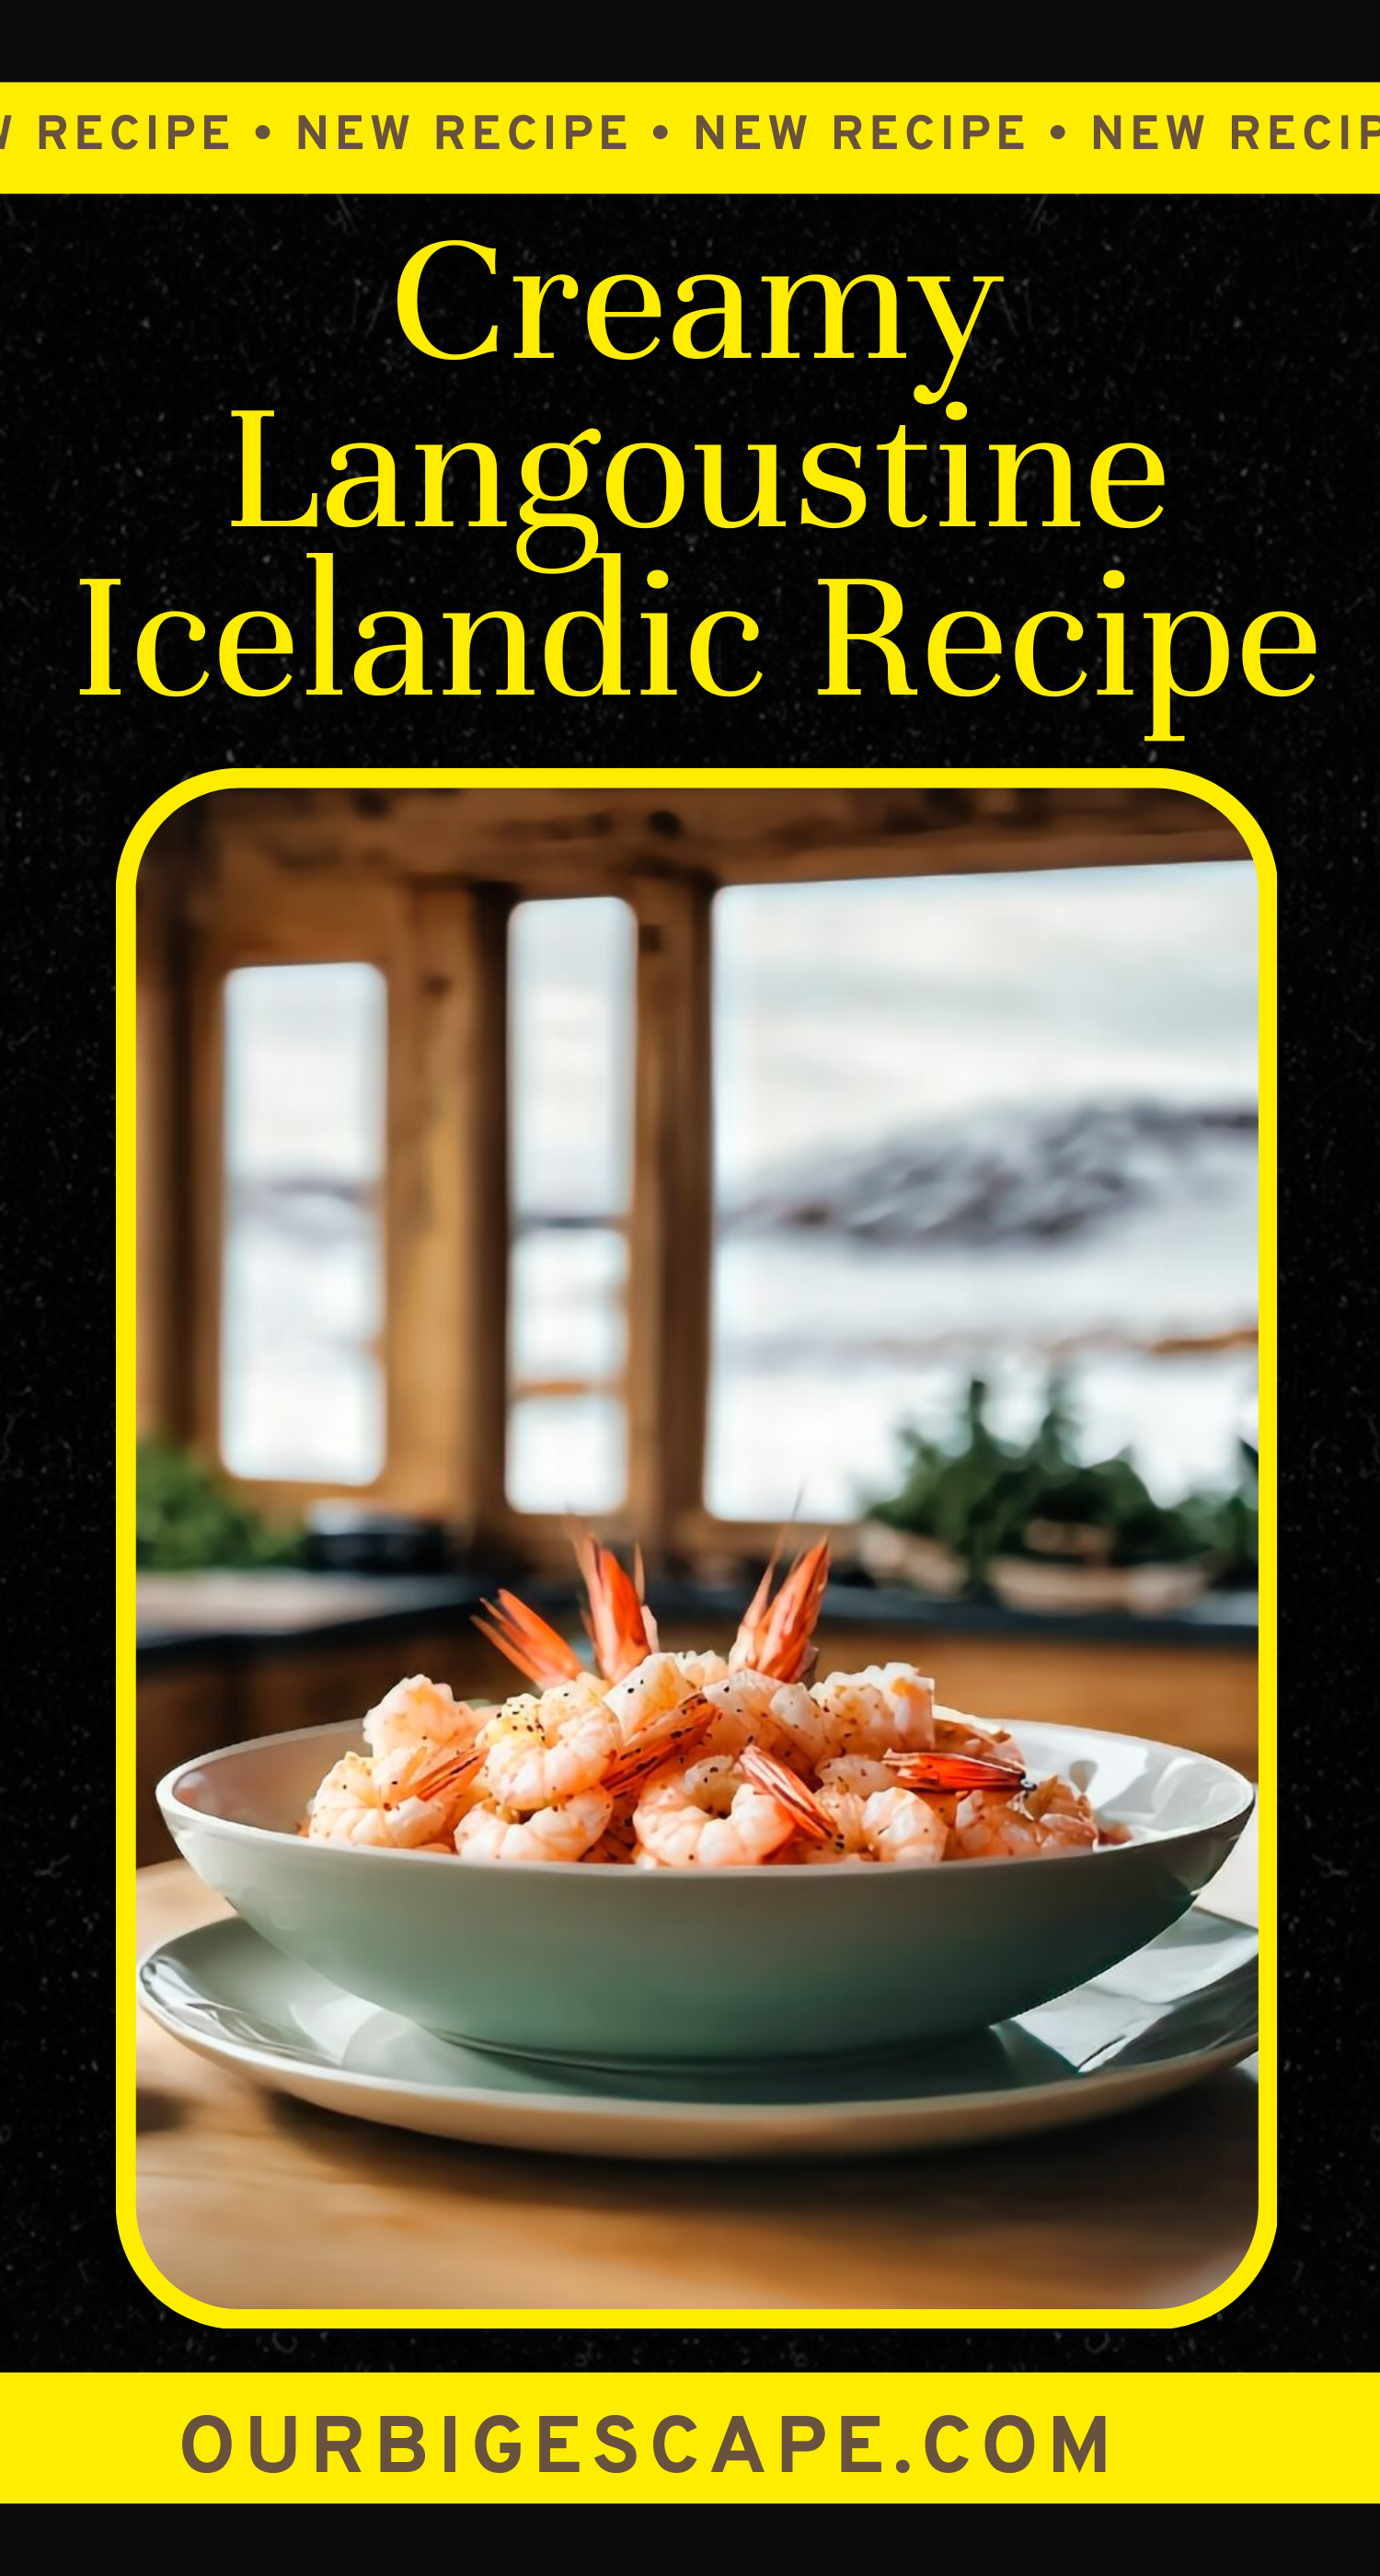 Creamy Langoustine Icelandic Recipe